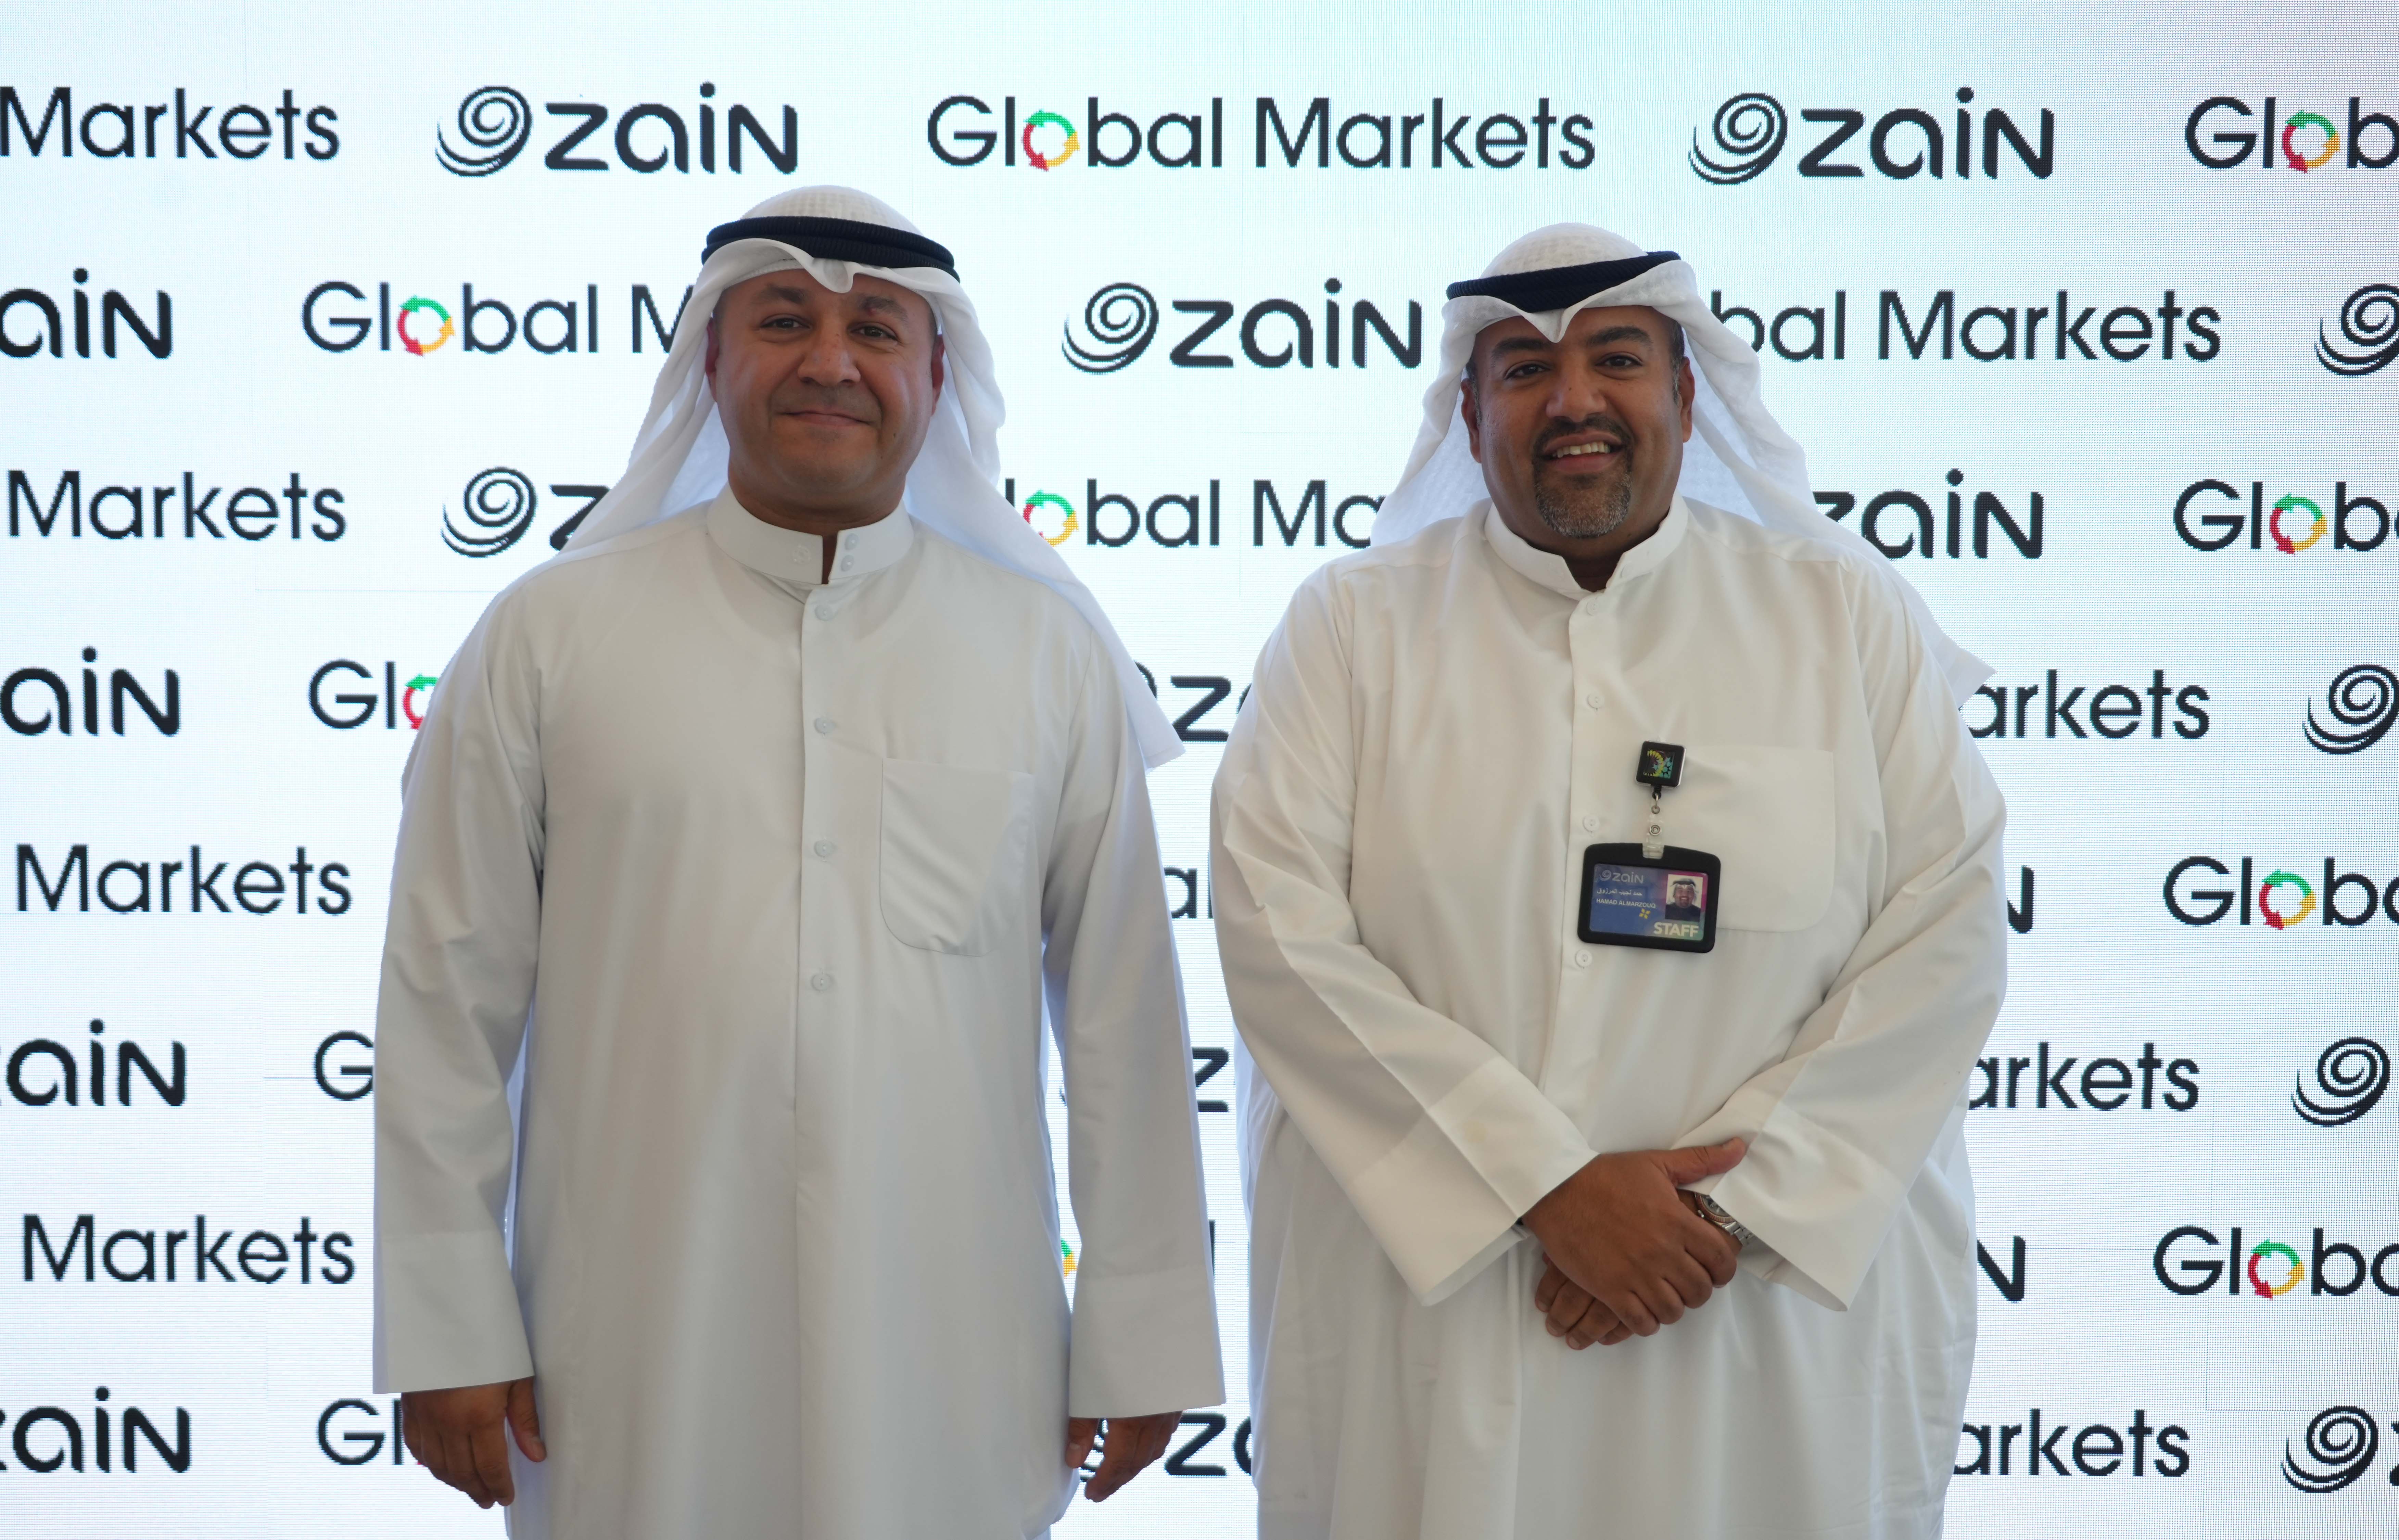 Zain extends strategic partnership with Global Markets